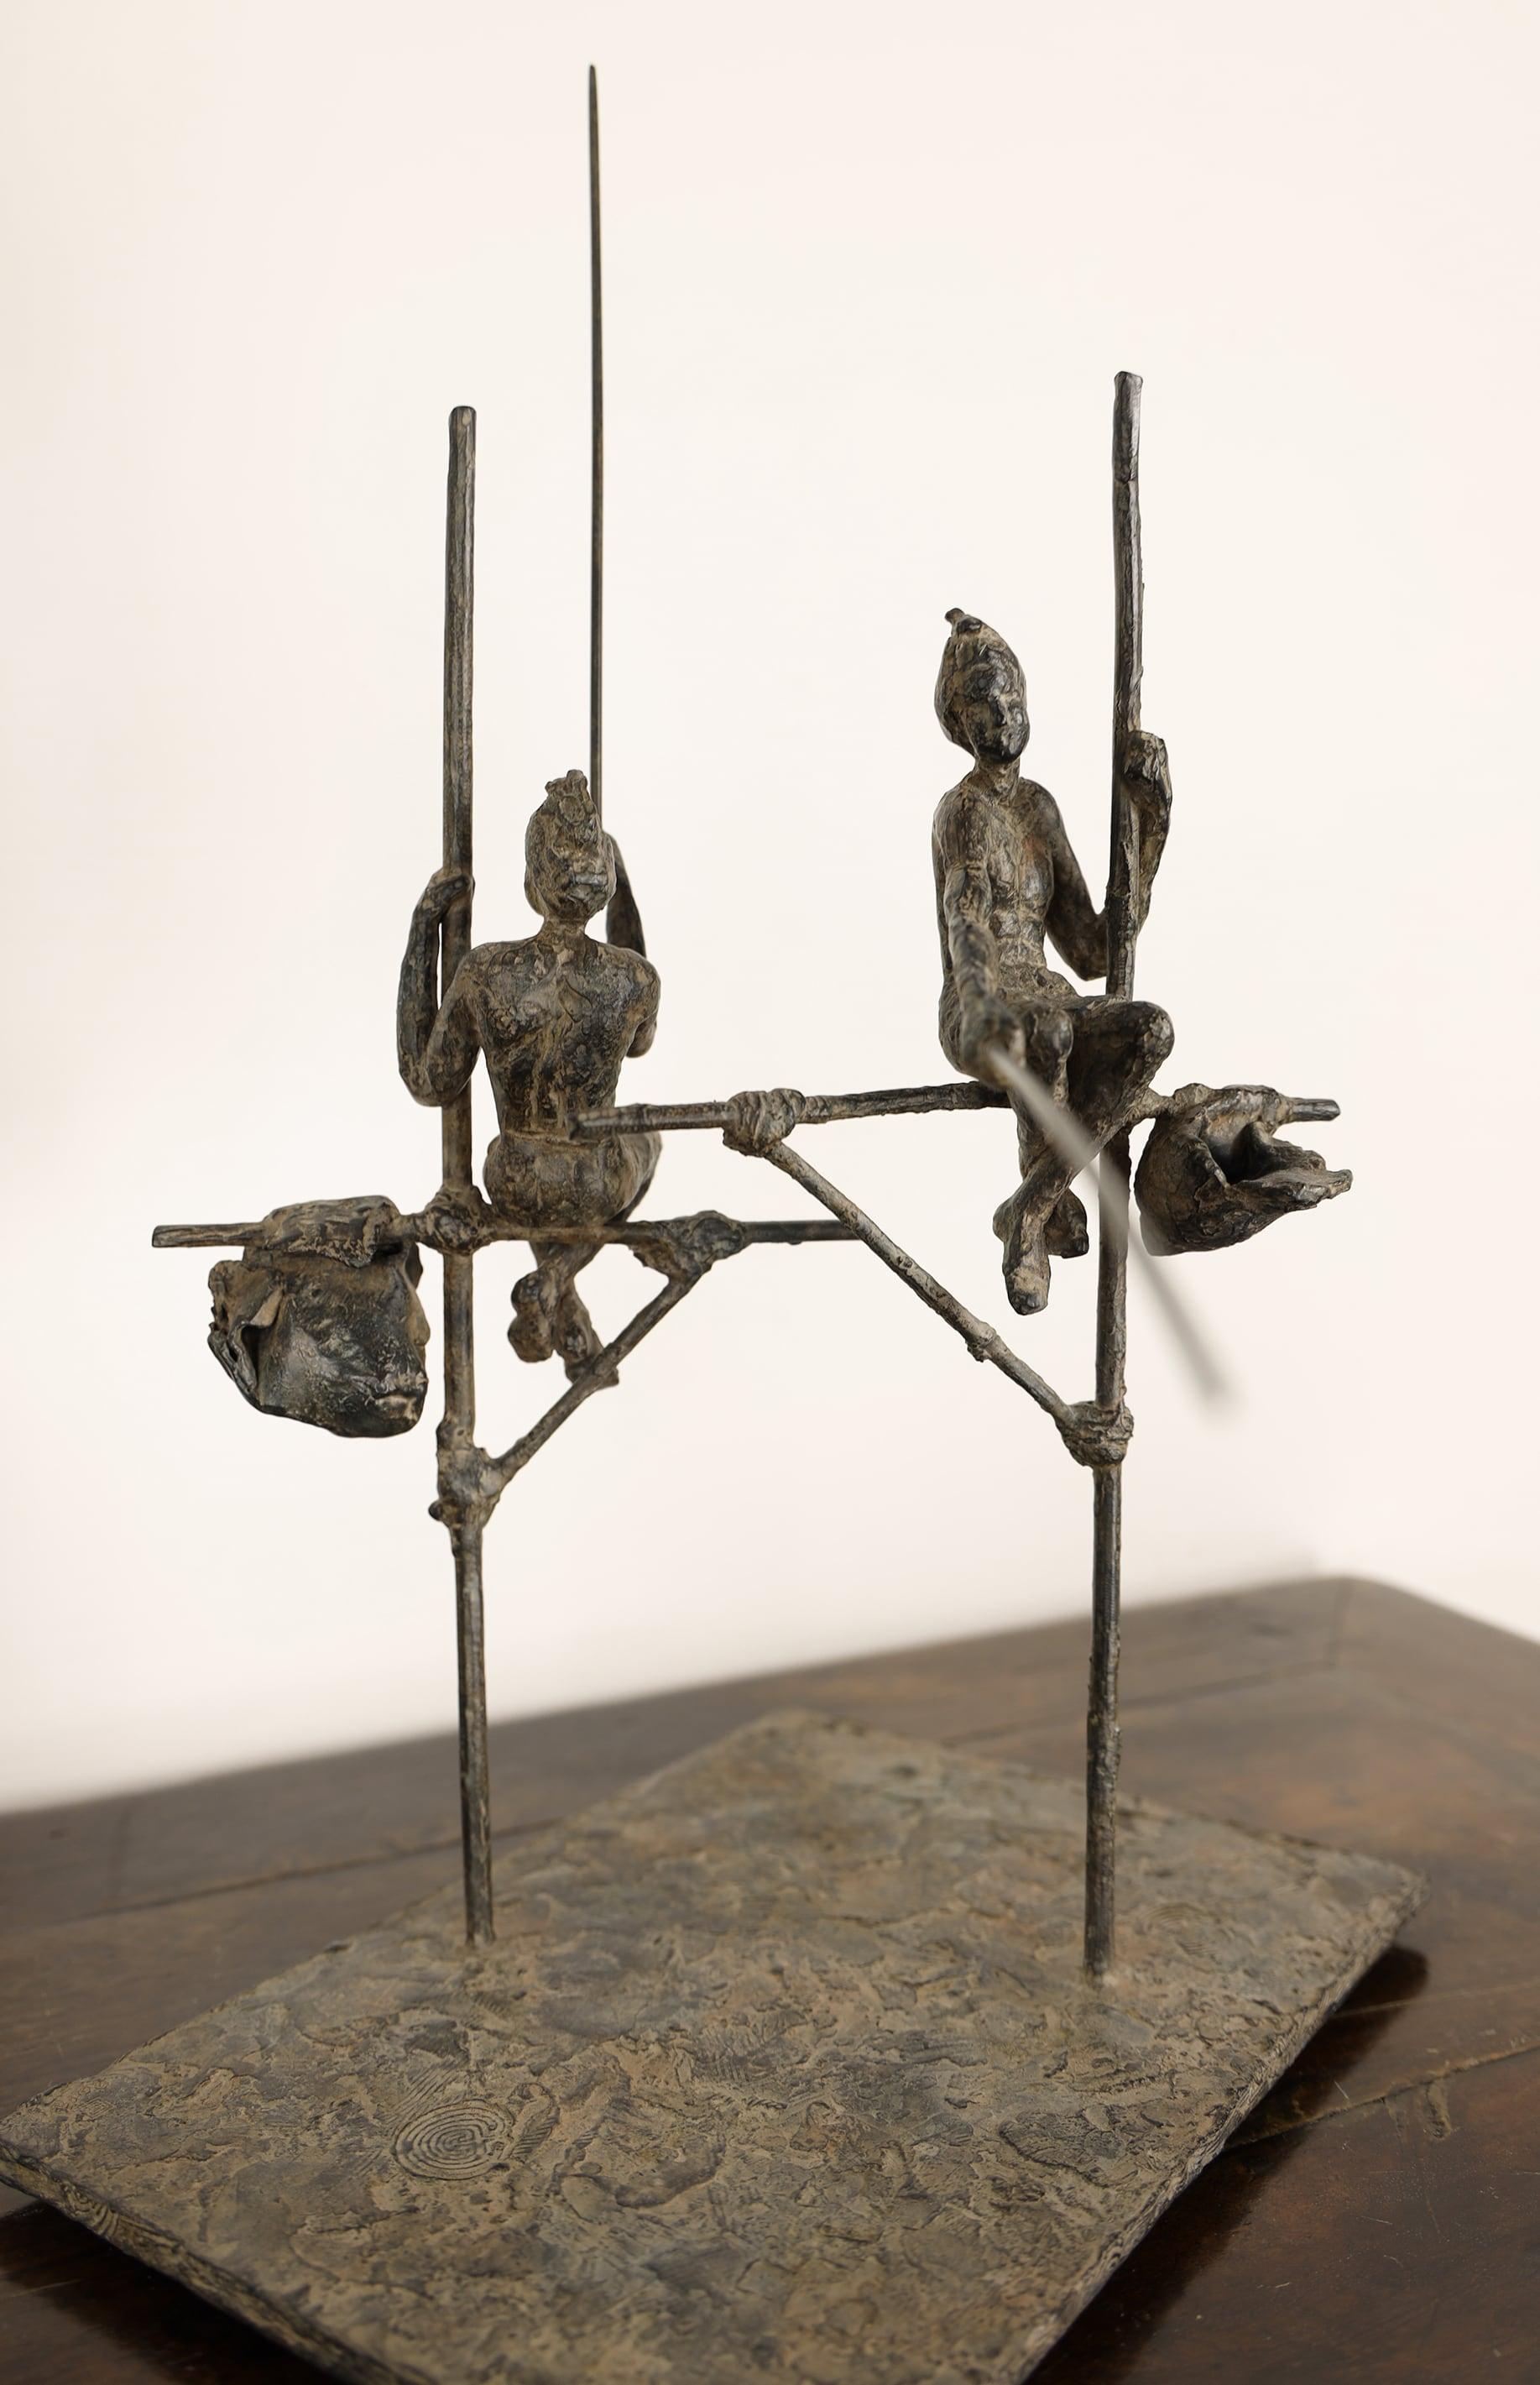 Marine de Soos Figurative Sculpture - Group of Two Fishermen on Stilts by M. de Soos - Contemporary bronze sculpture